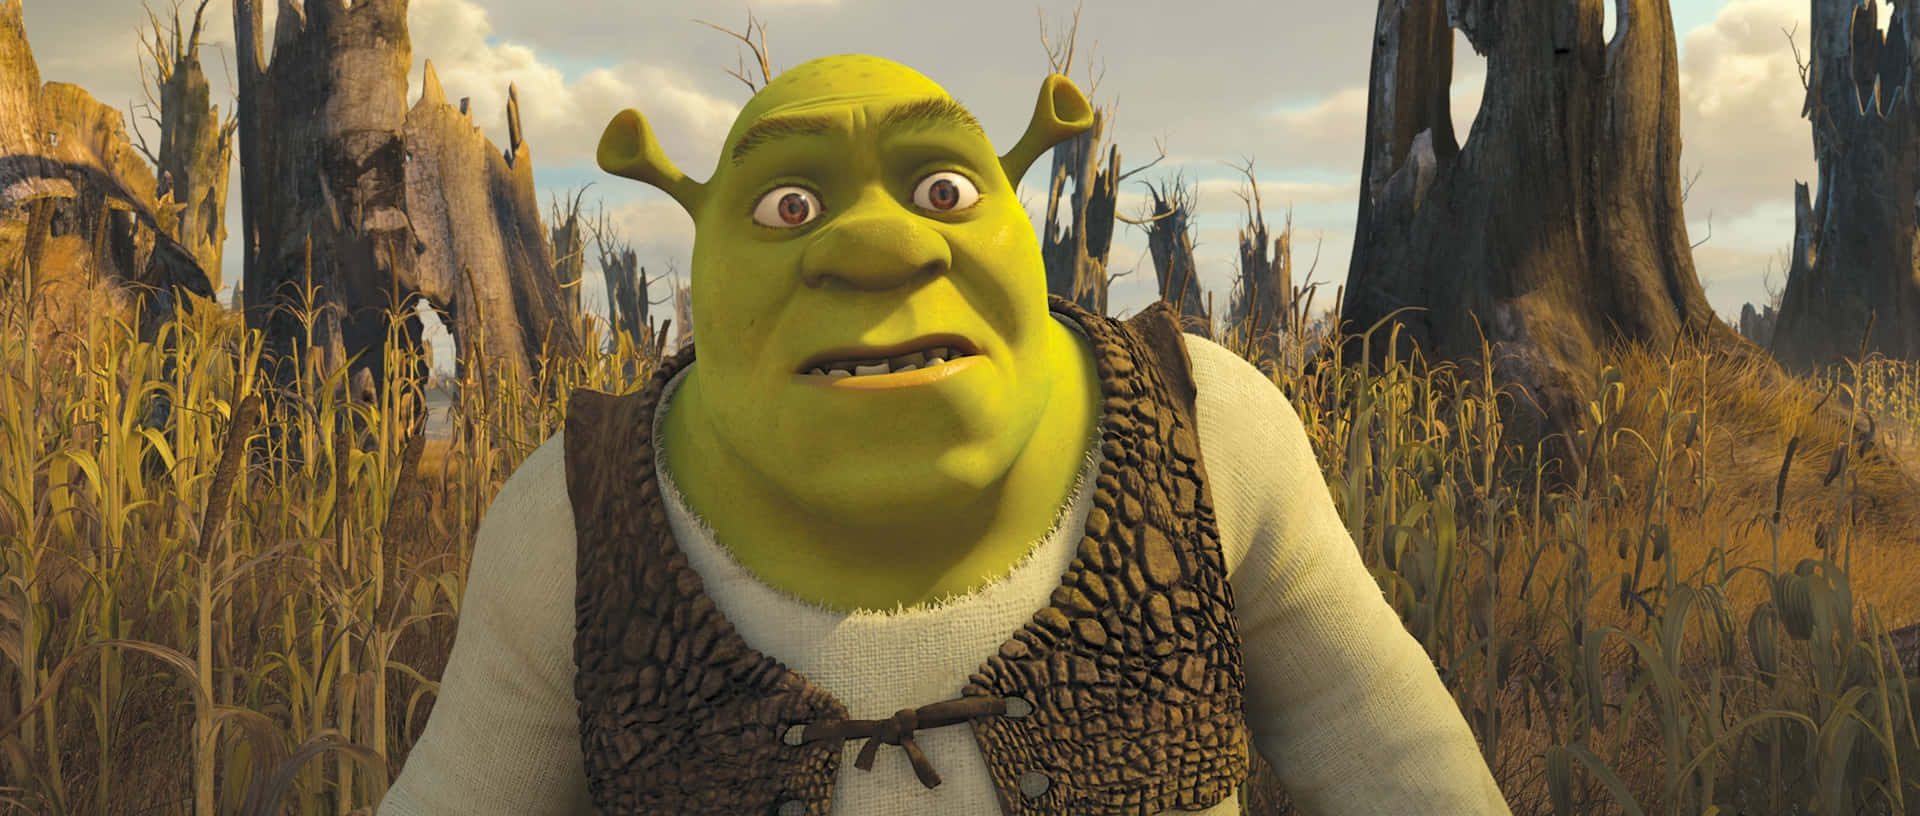 Shrekbaggrundsbillede